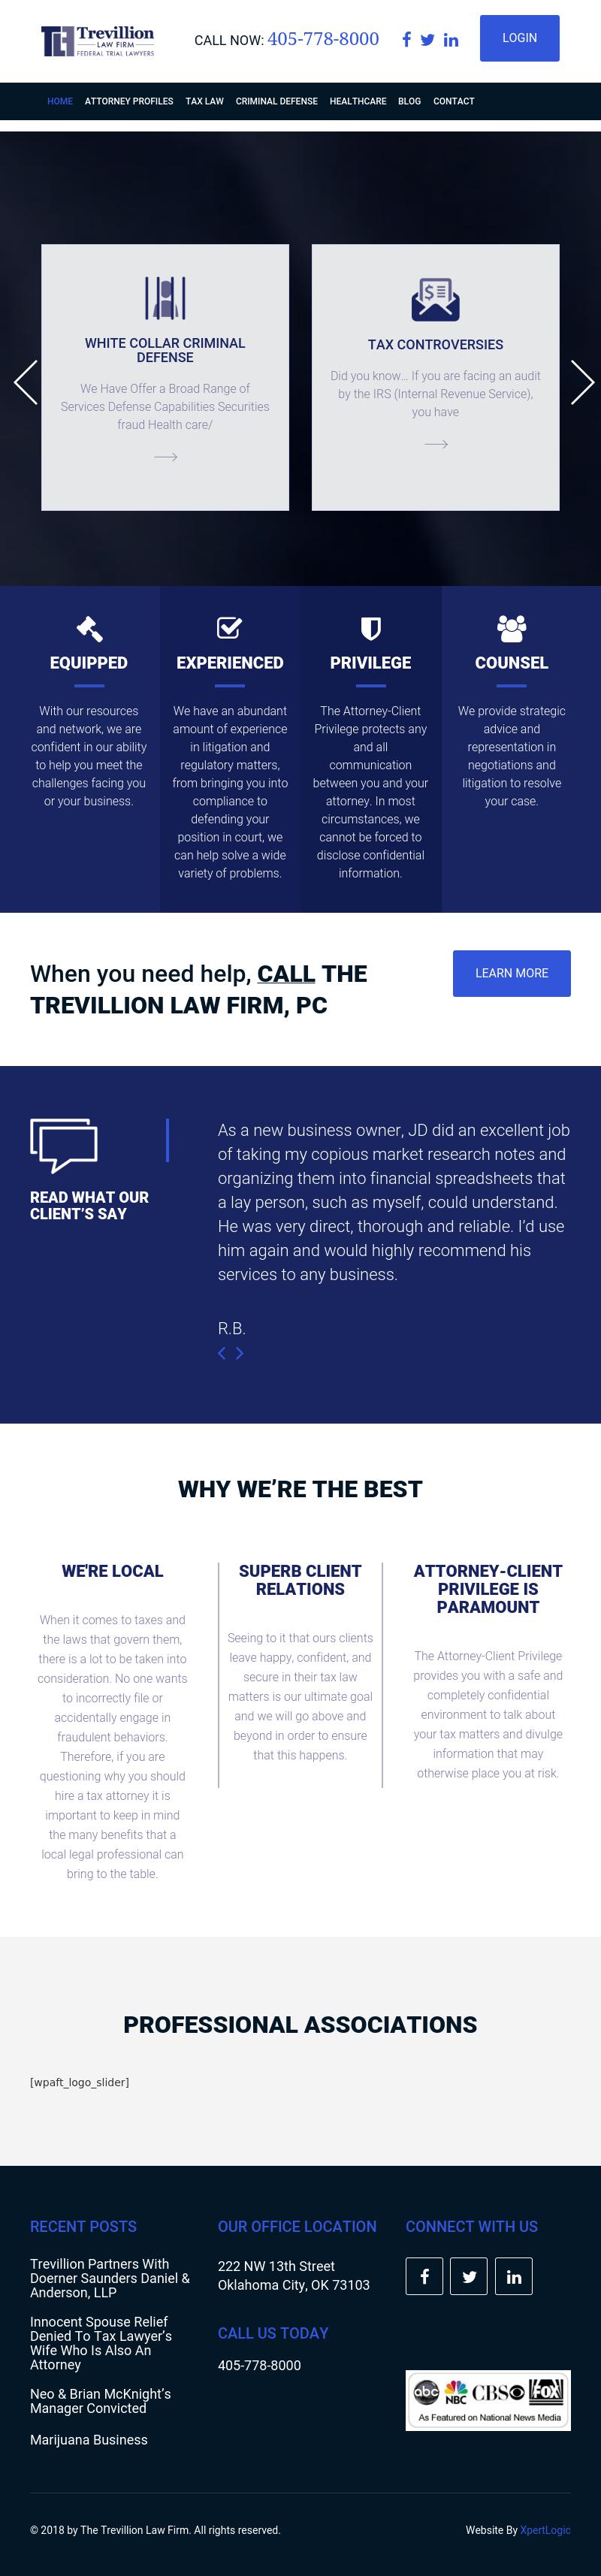 The Trevillion Law Firm - Oklahoma City OK Lawyers